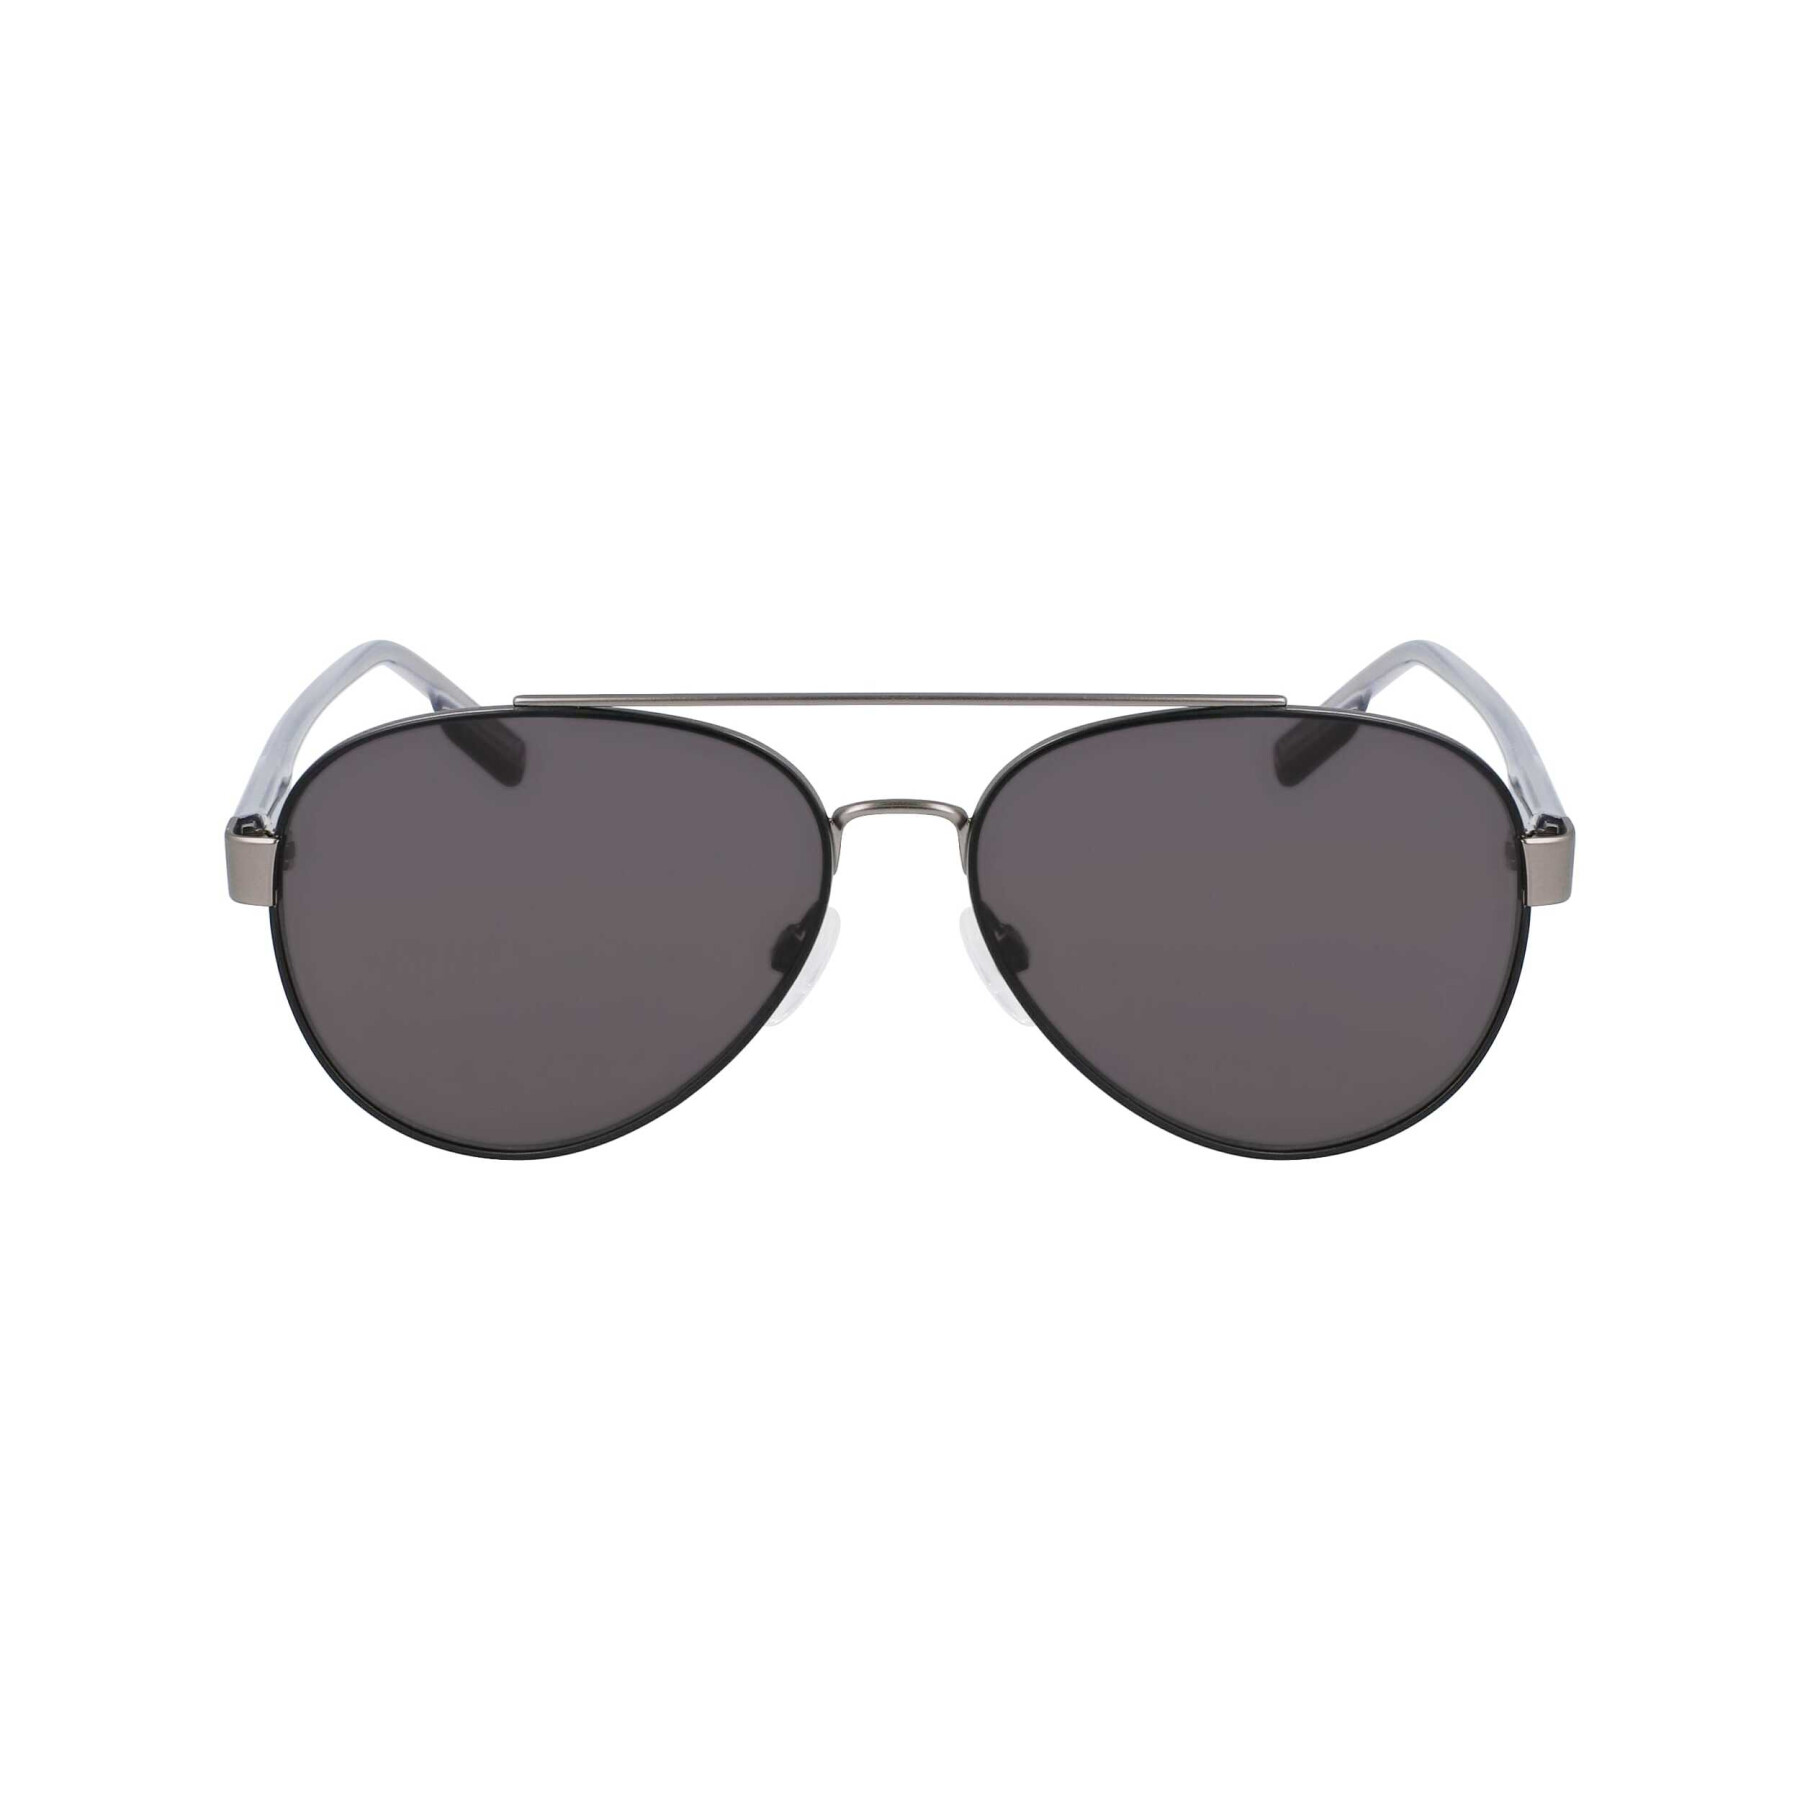 Sunglasses Converse CV300SDISR001